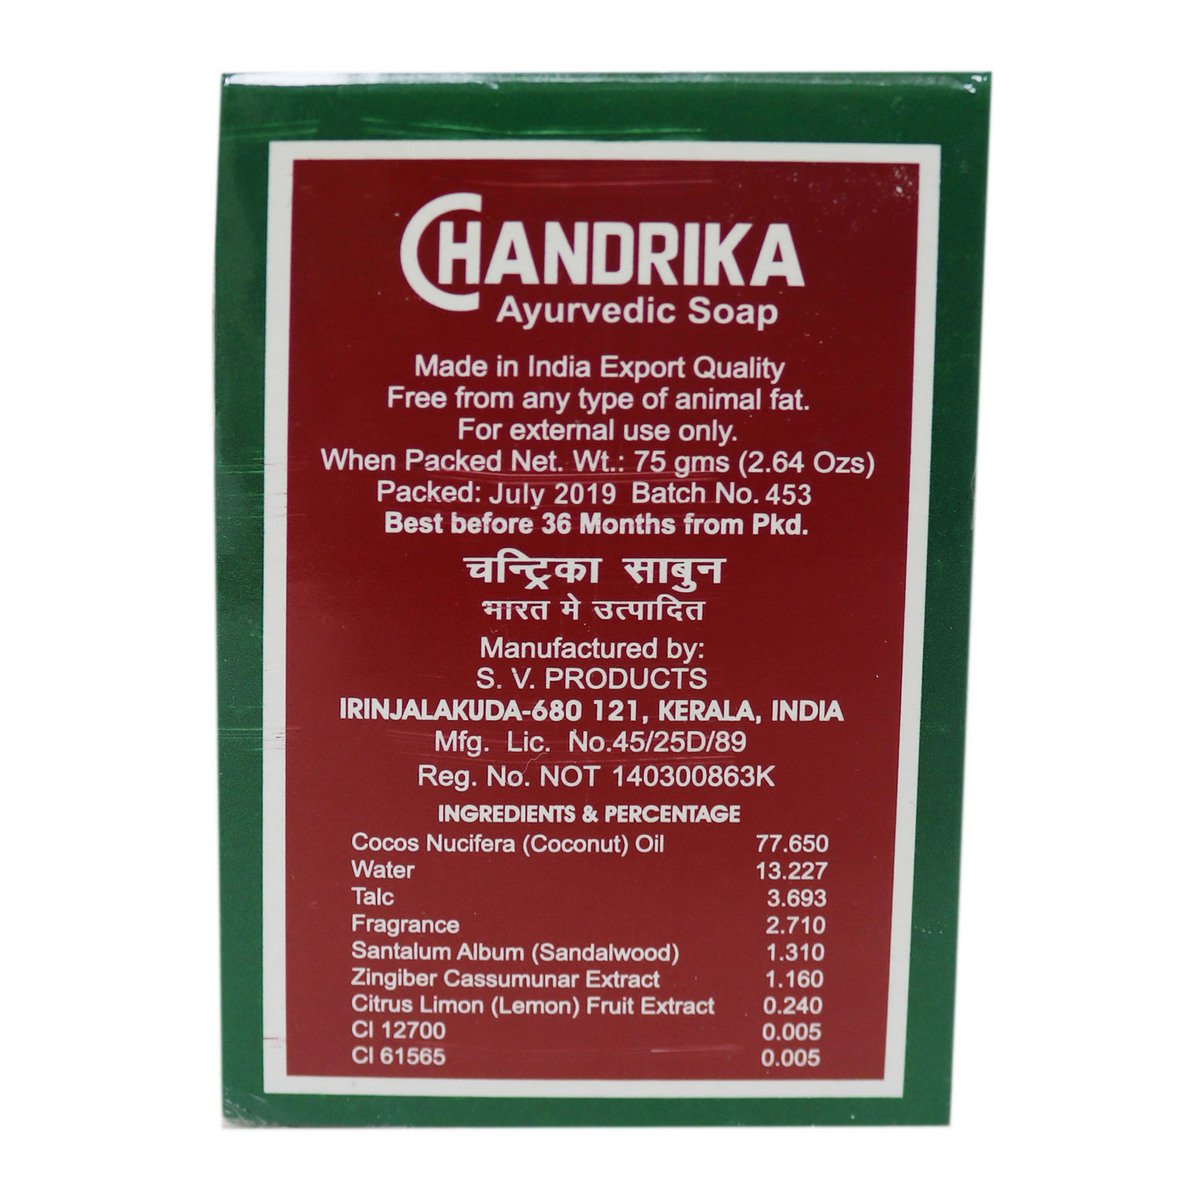 Chandrika Ayurveda Bath Soap 75g